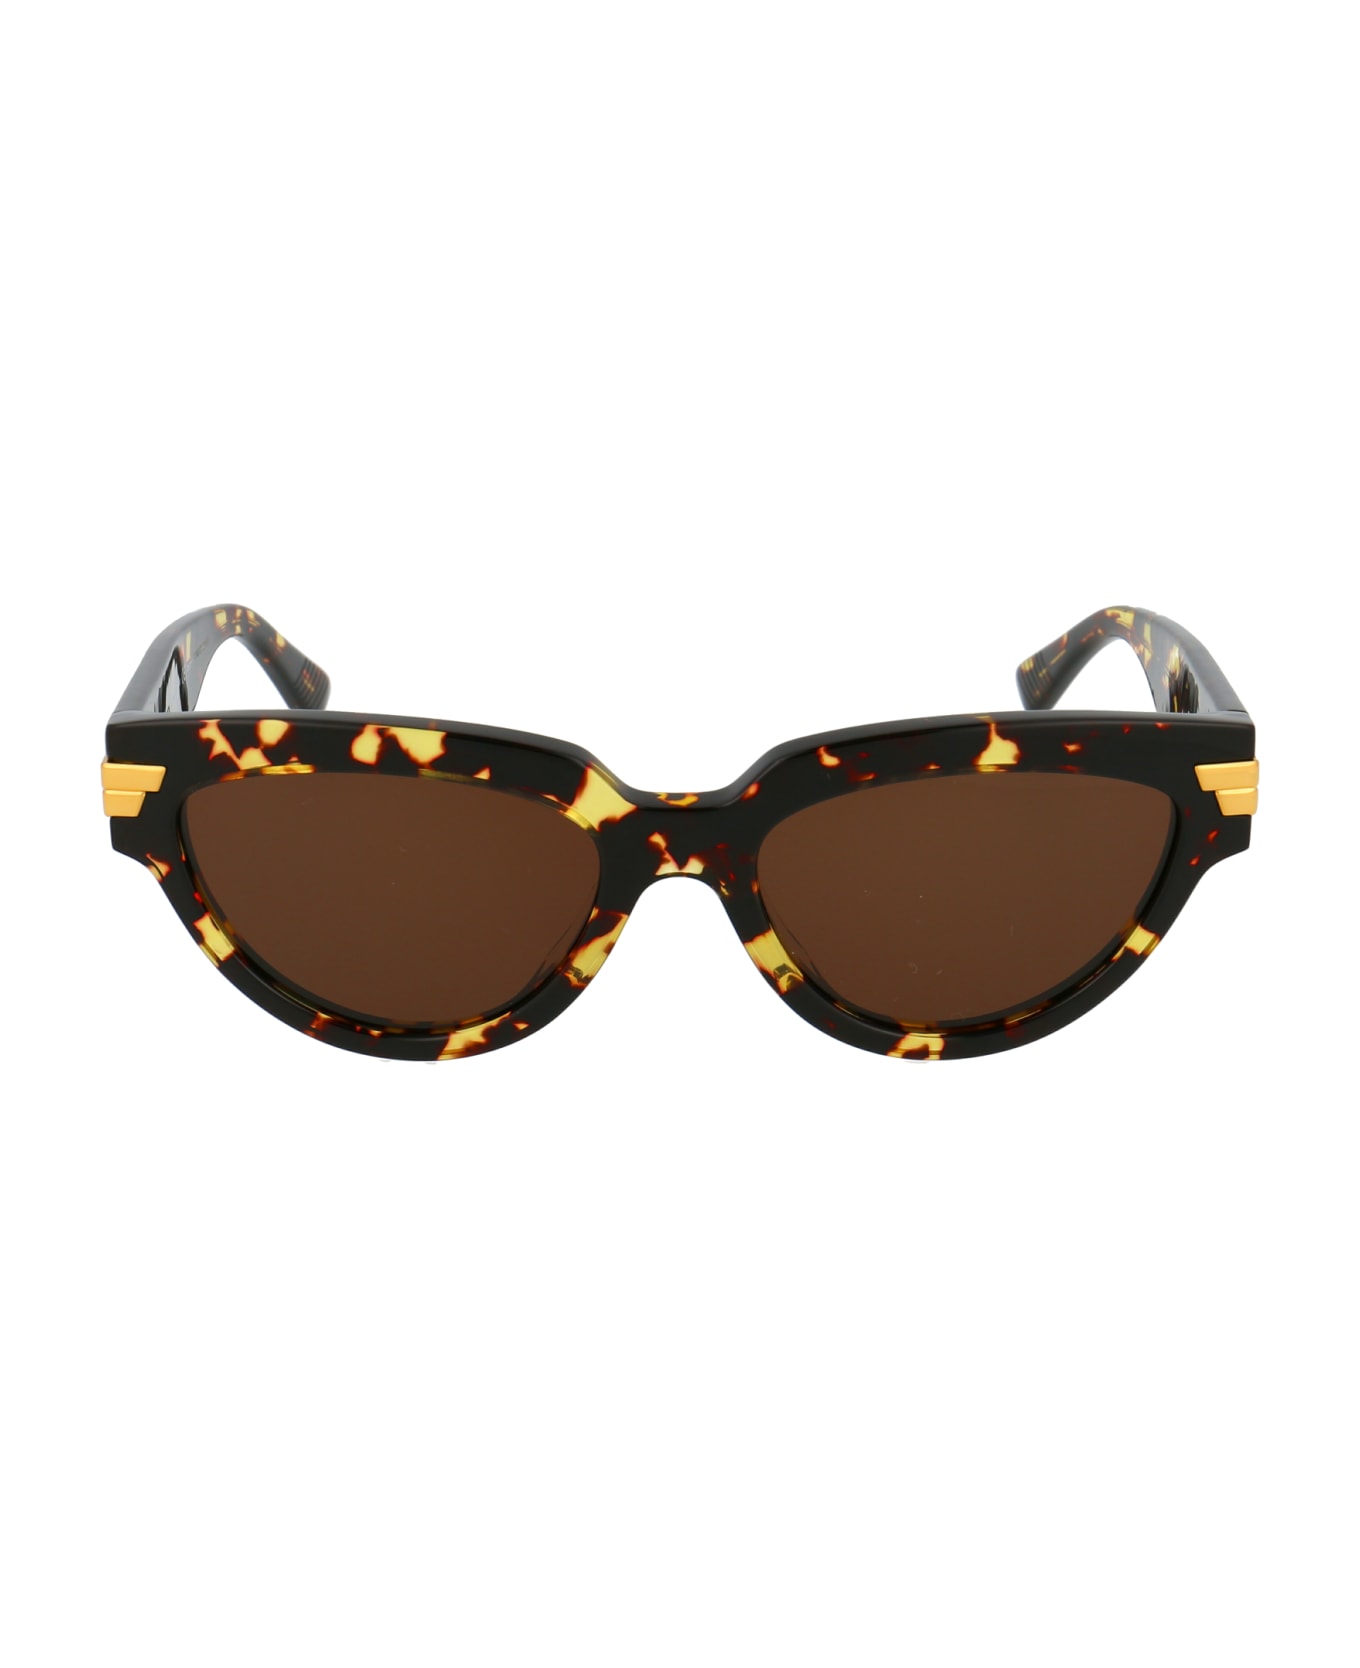 Bottega Veneta Eyewear Bv1035s Sunglasses - 002 HAVANA HAVANA BROWN